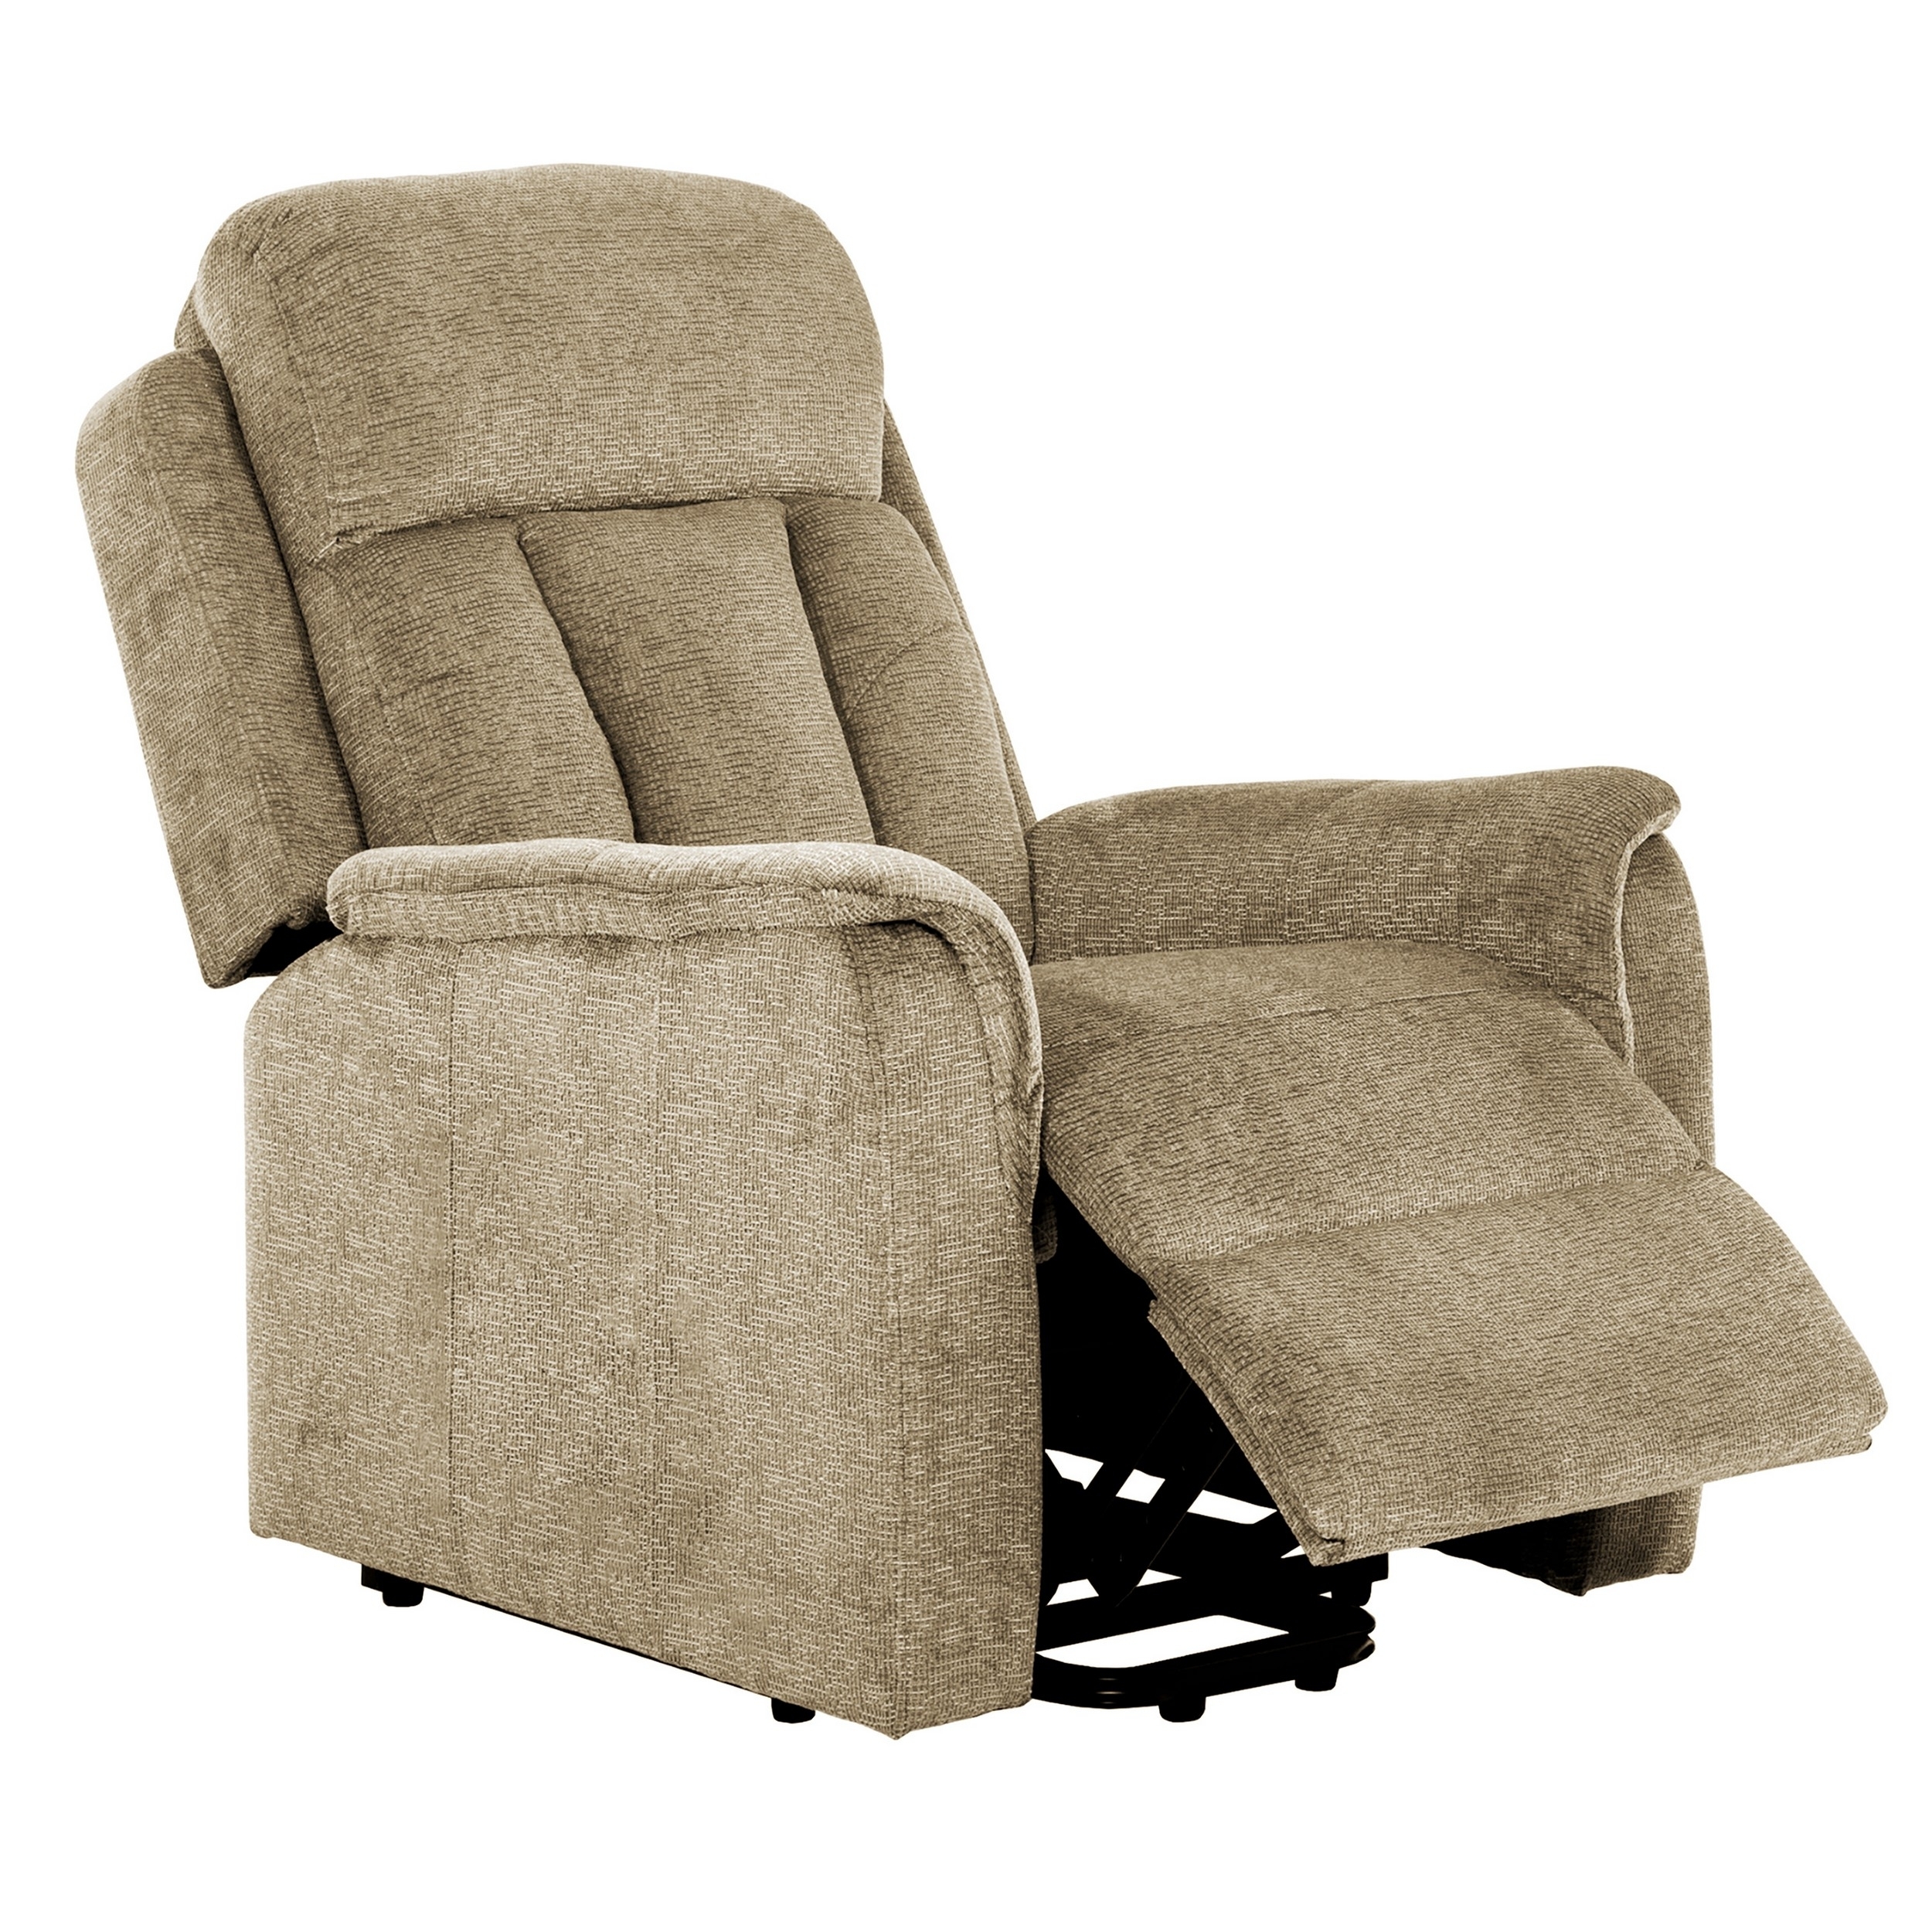 38 Inch Rocker Recliner, Gray Fabric Upholstery, Coil And Foam Seating- Saltoro Sherpi